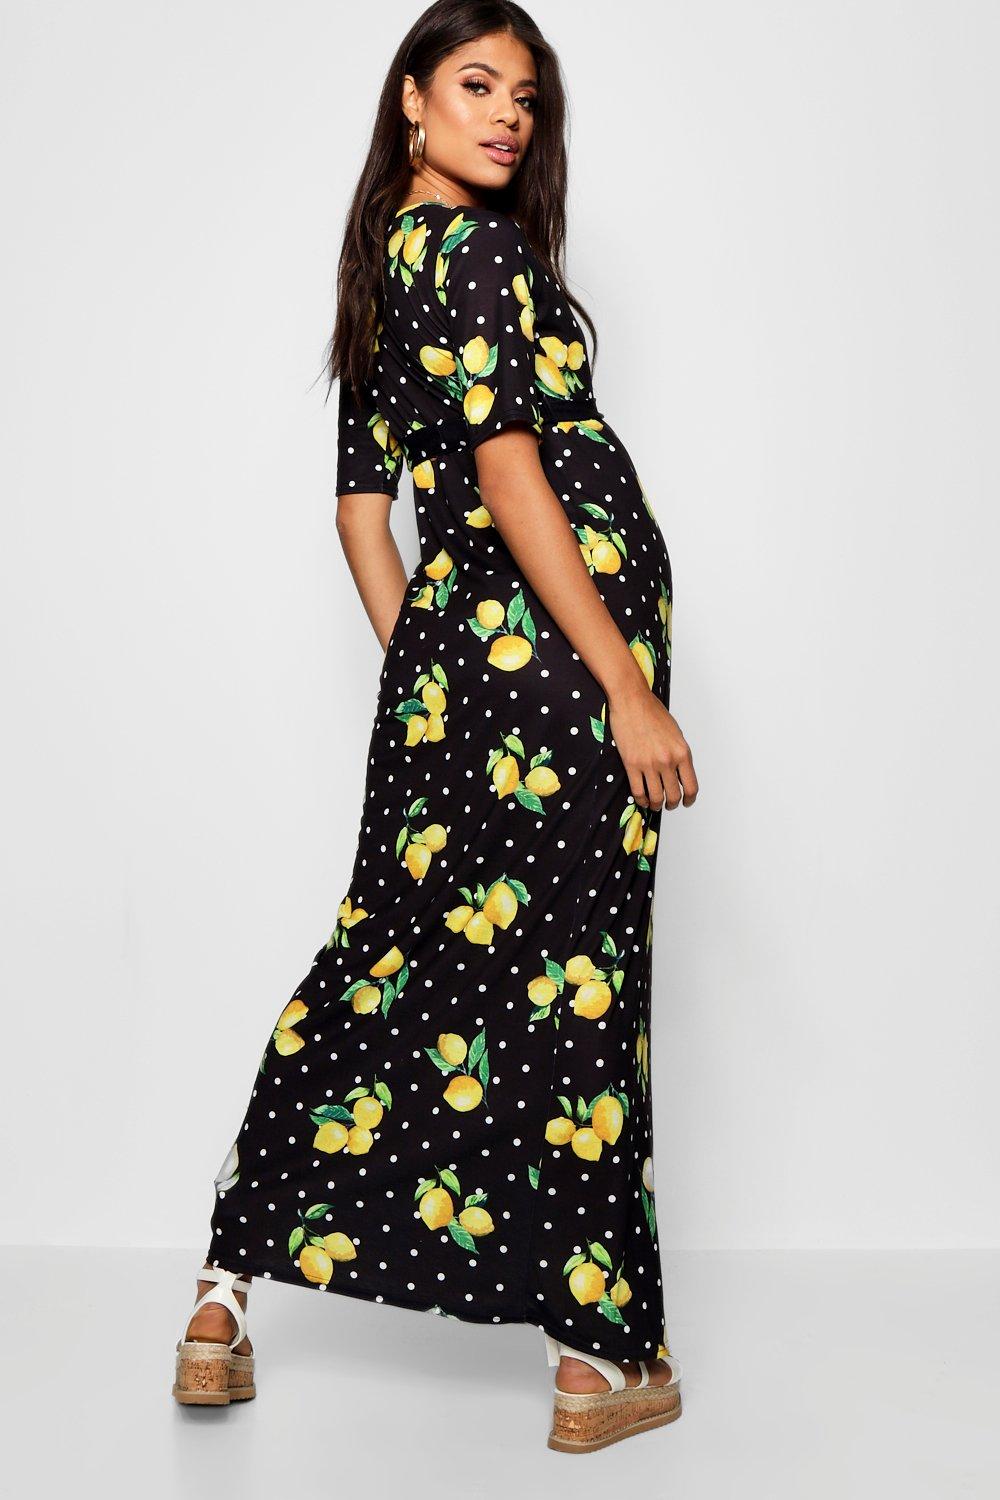 Lemon Print Wrap Dress on Sale, 57% OFF ...